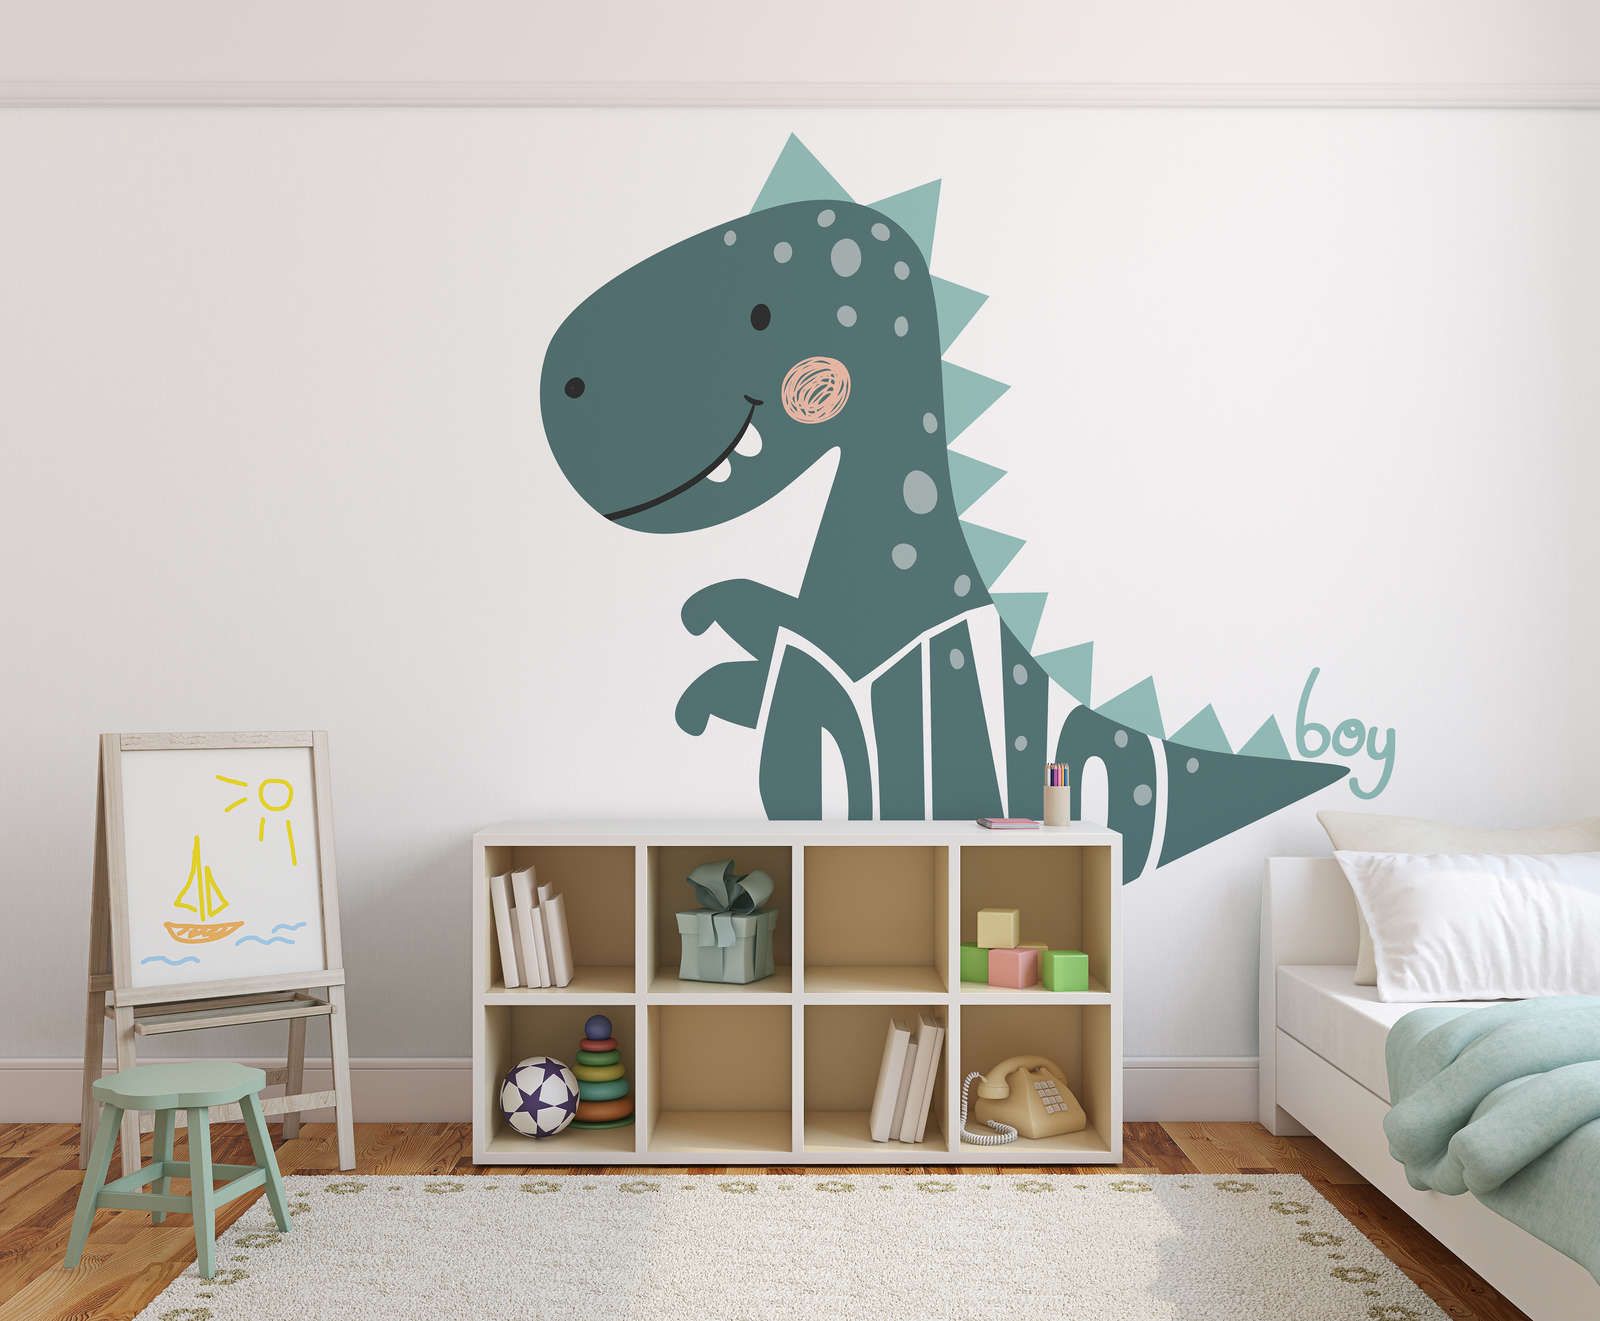             Nursery mural with dinosaur - Smooth & pearlescent fleece
        